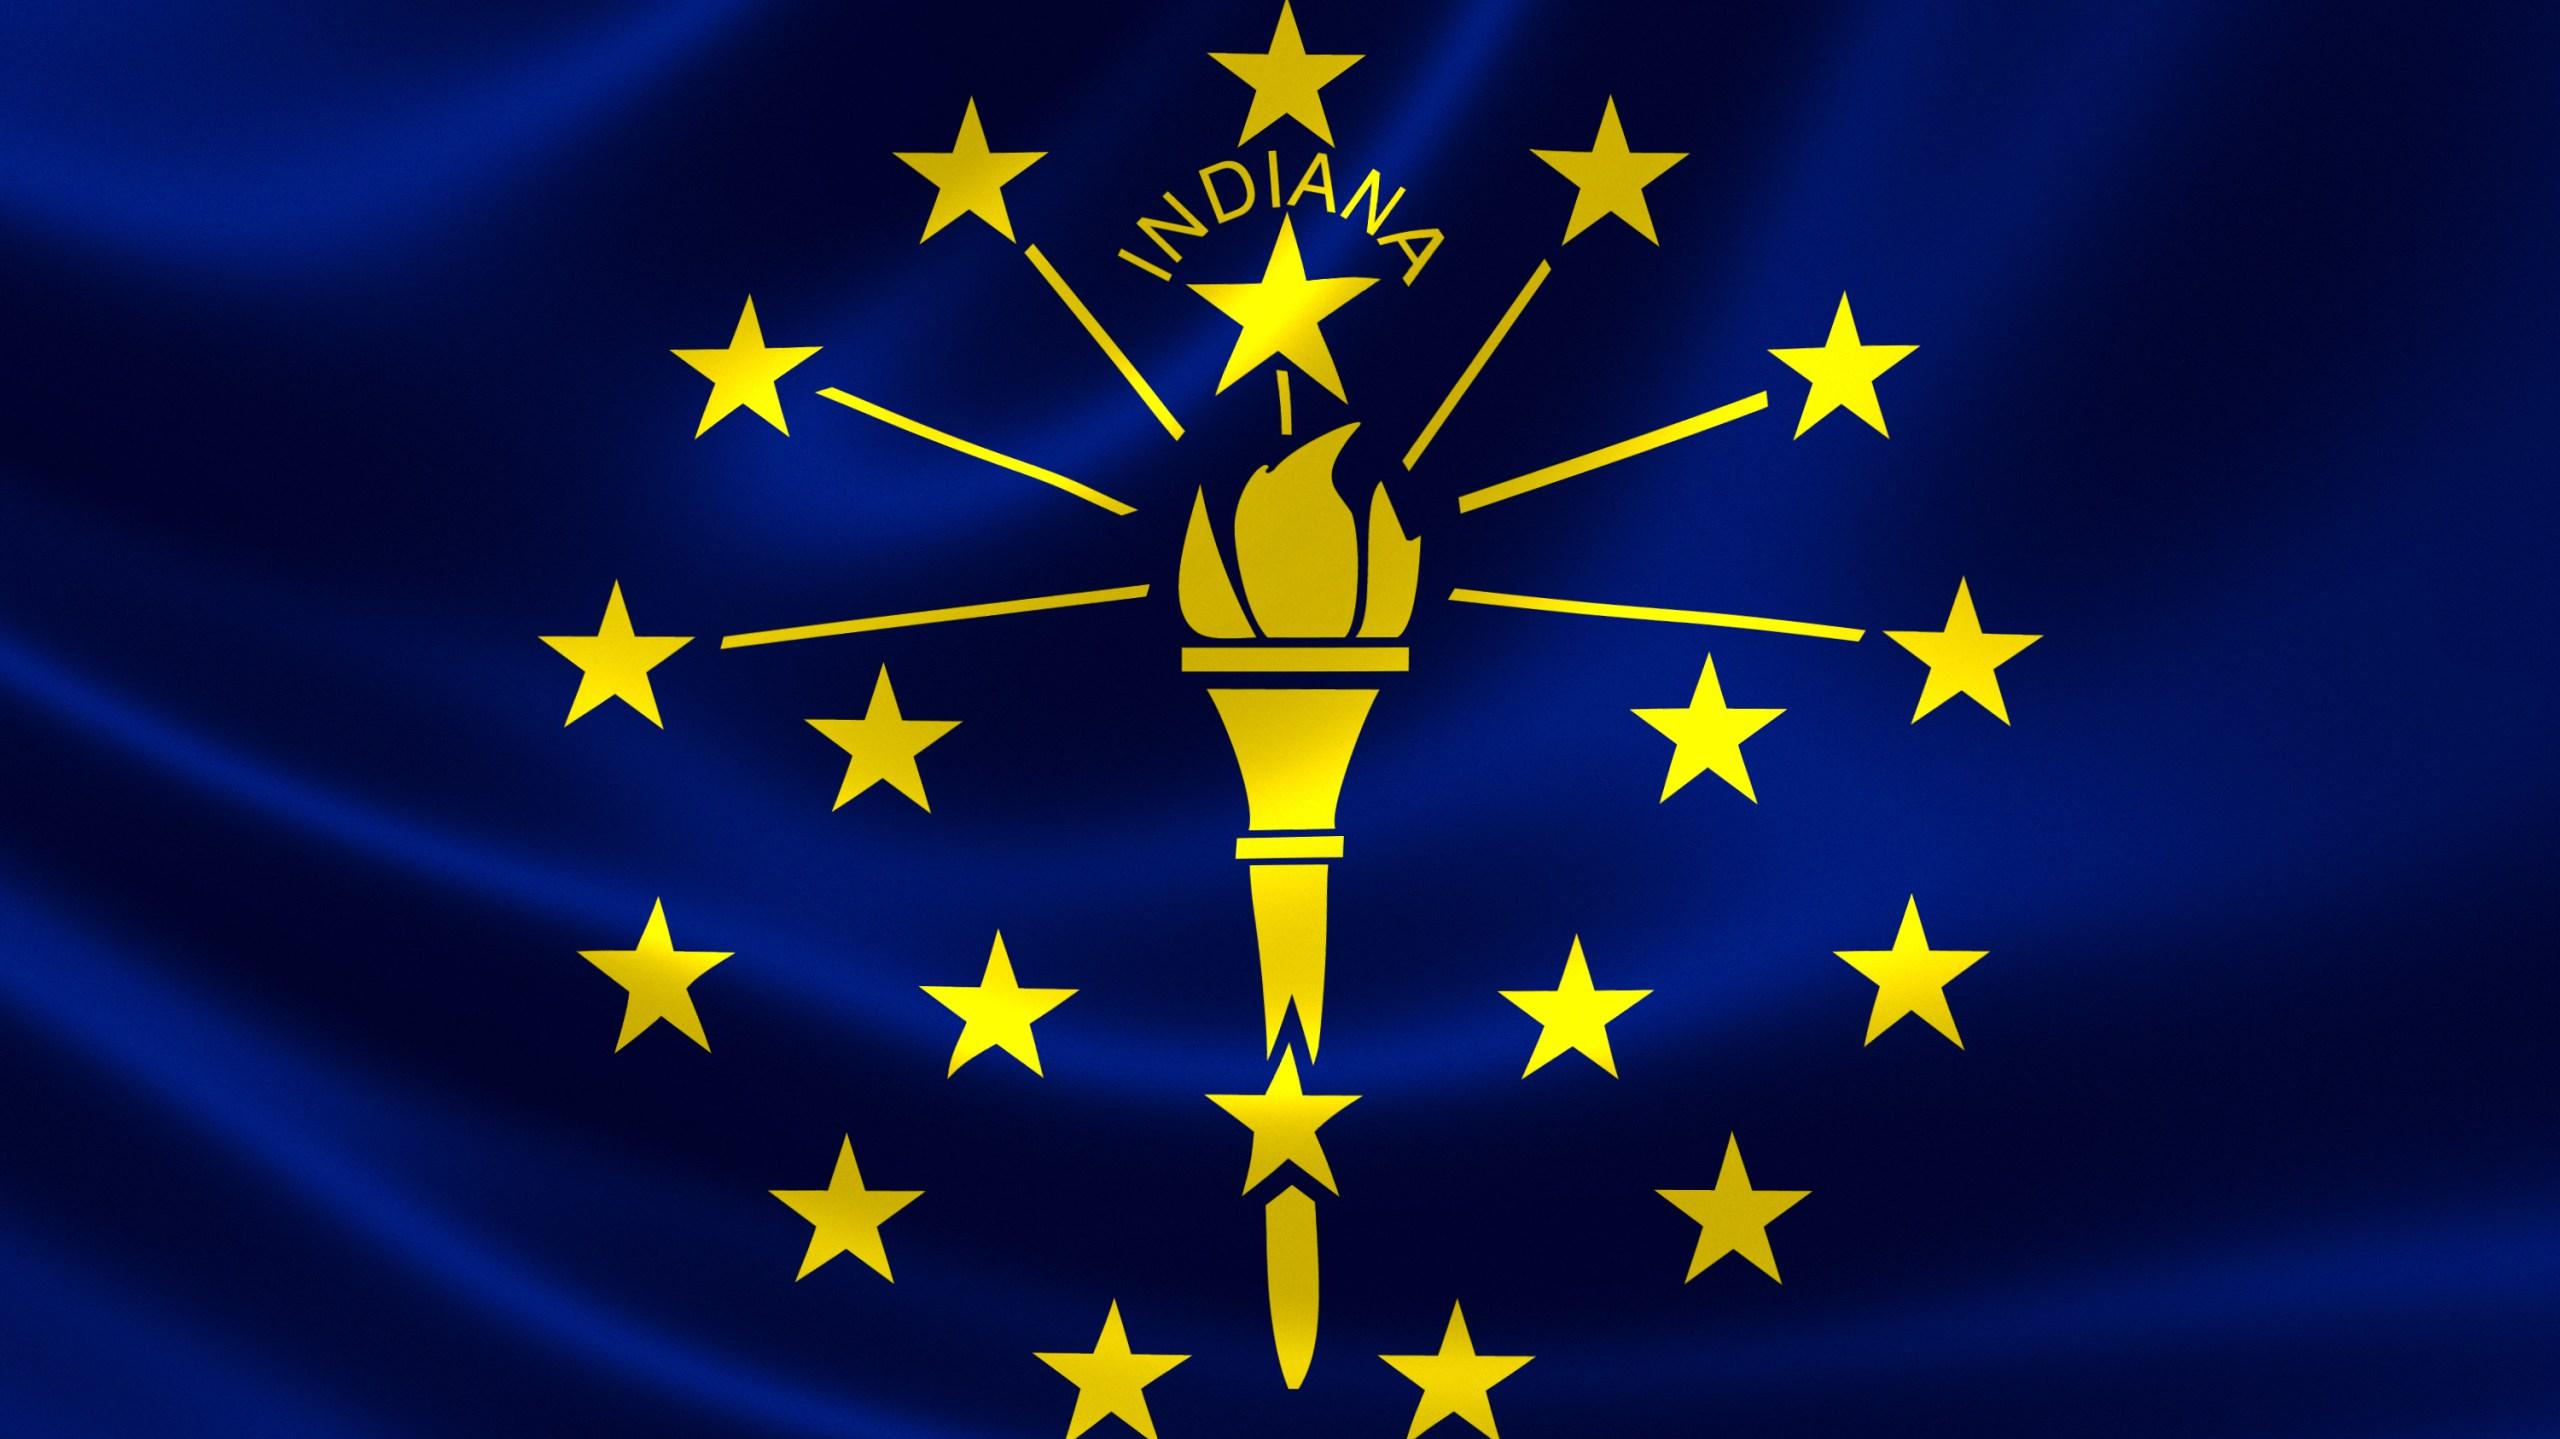 Tri State Landmarks In Indiana Awarded Grant Money For